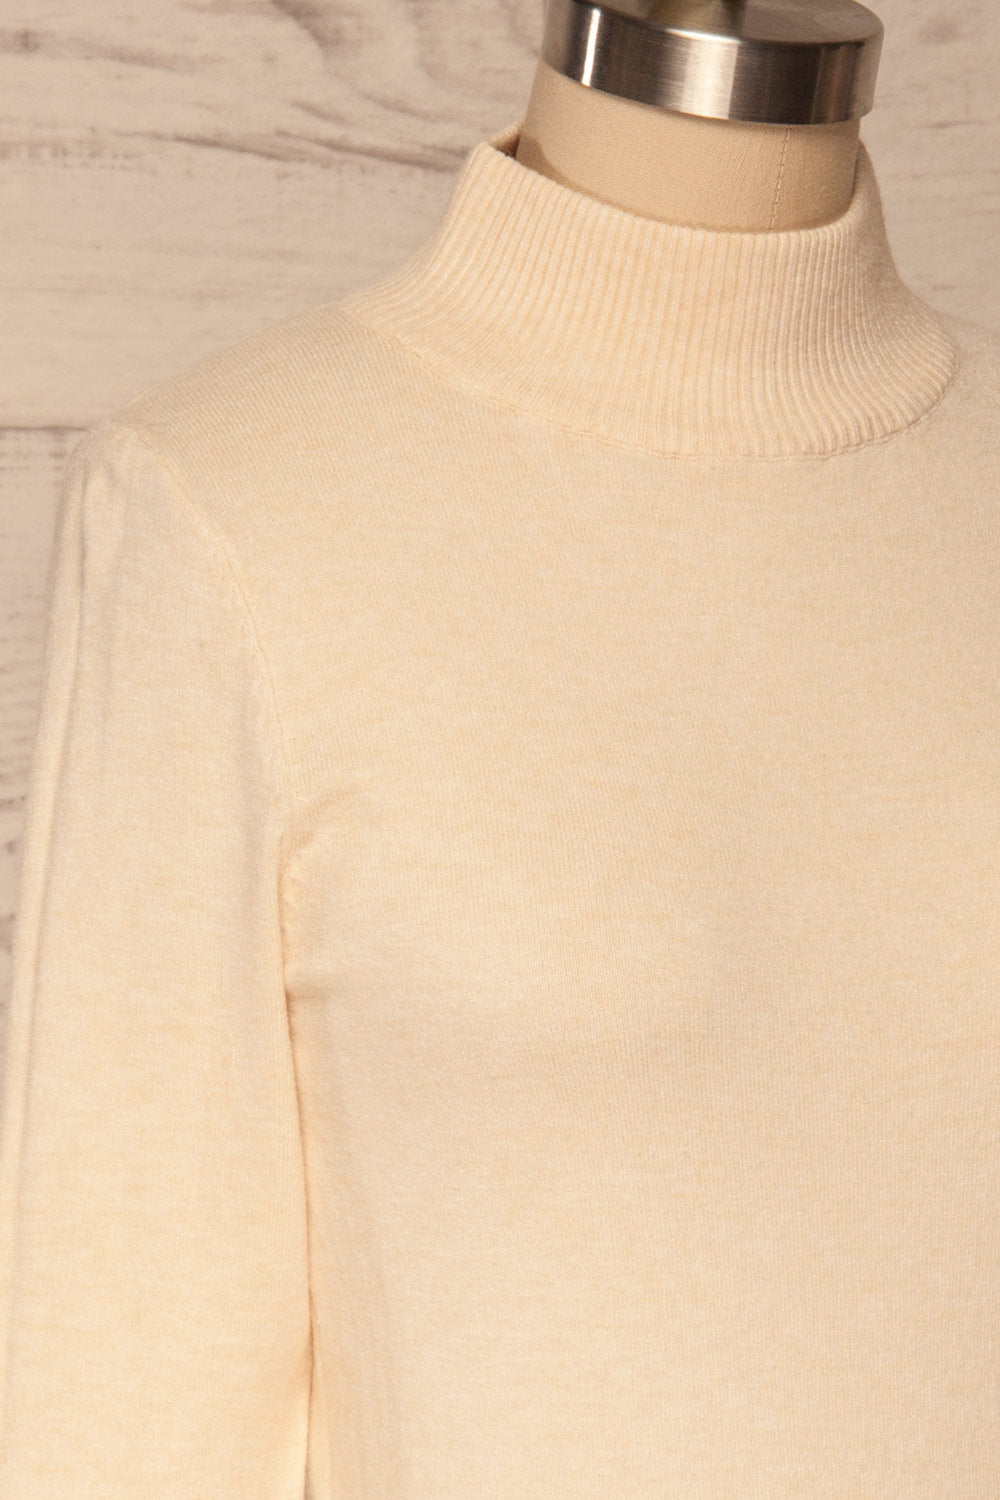 Kuznia Cream Long Sleeve Mock Neck Top | La petite garçonne side close up